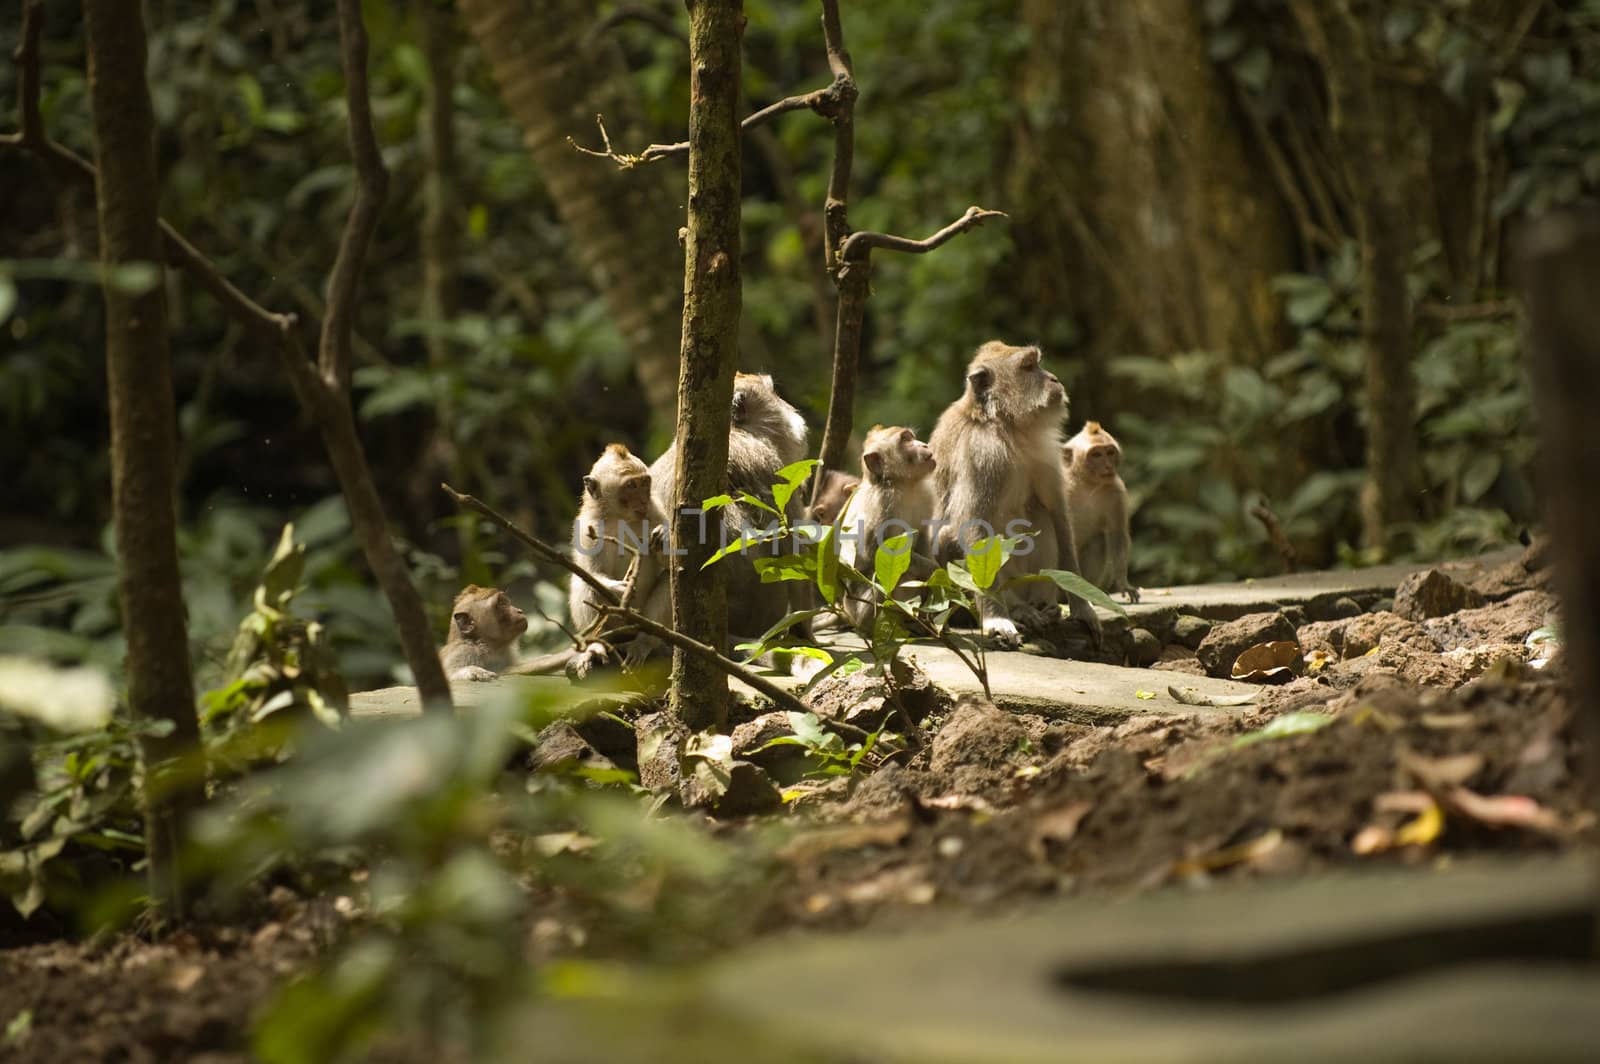 Group of monkeys by edan